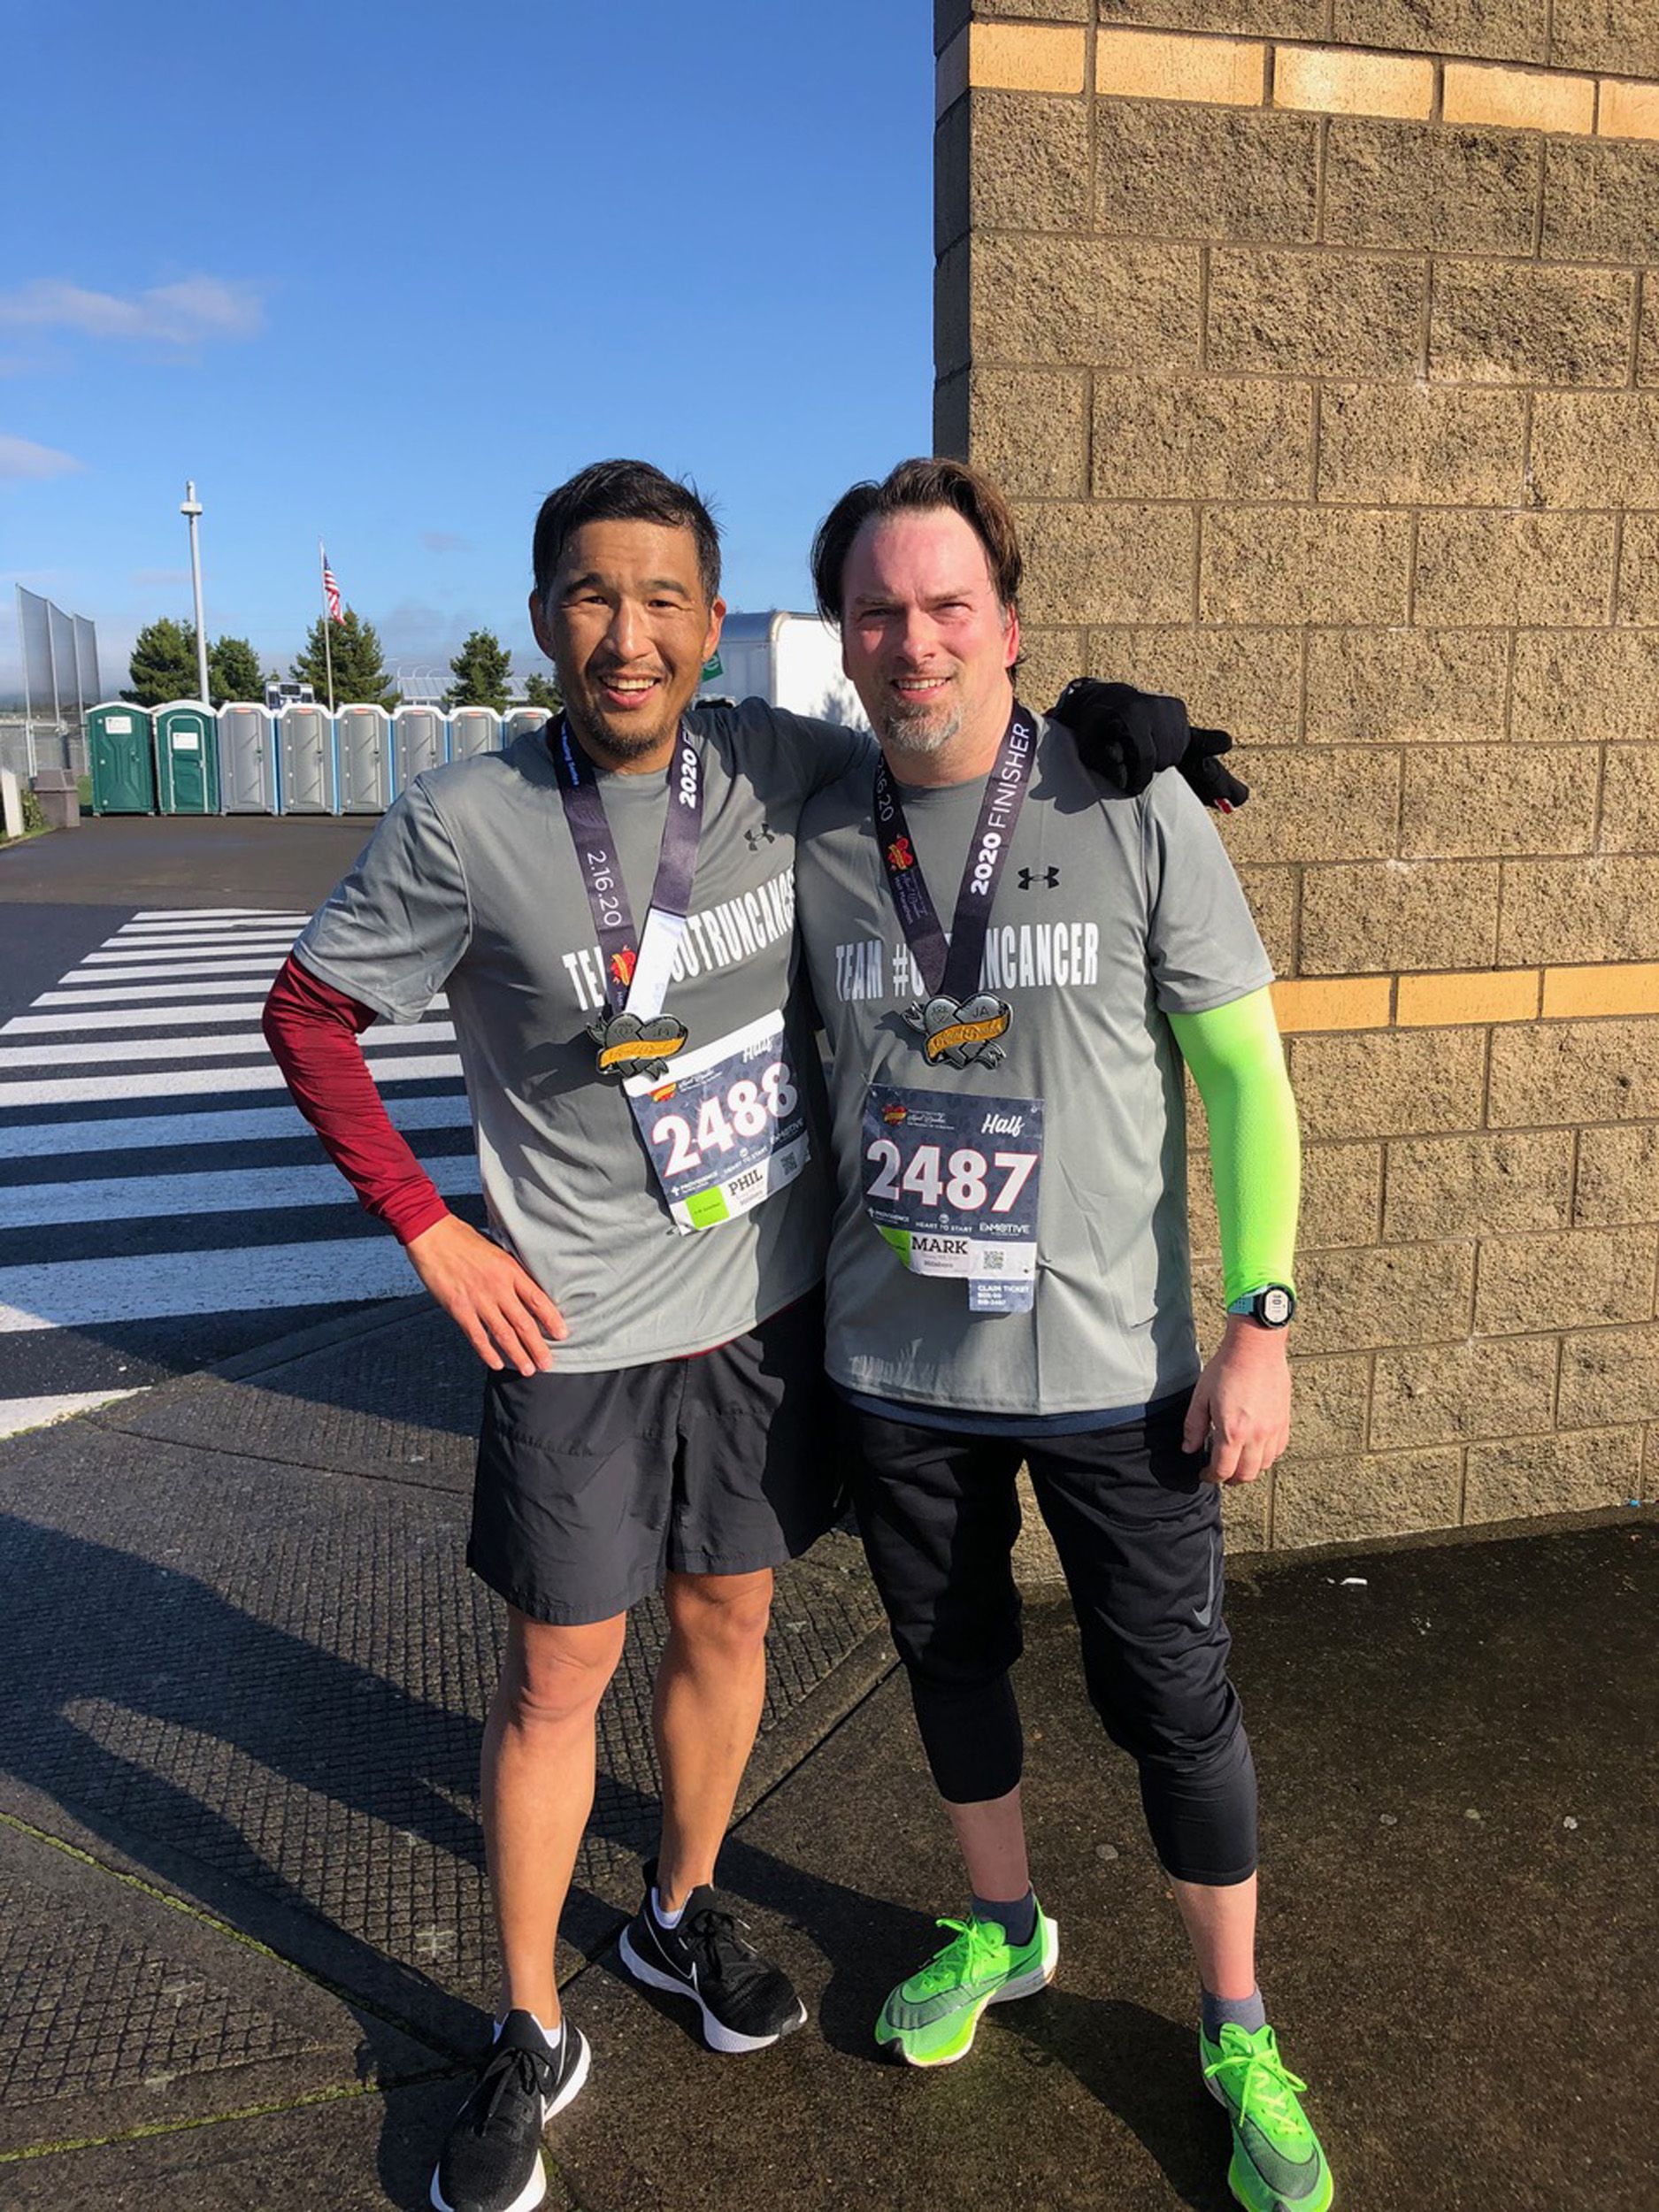 Liver Donor Runs Boston With Recipient - Two Friends Will Take on Boston  Marathon Together